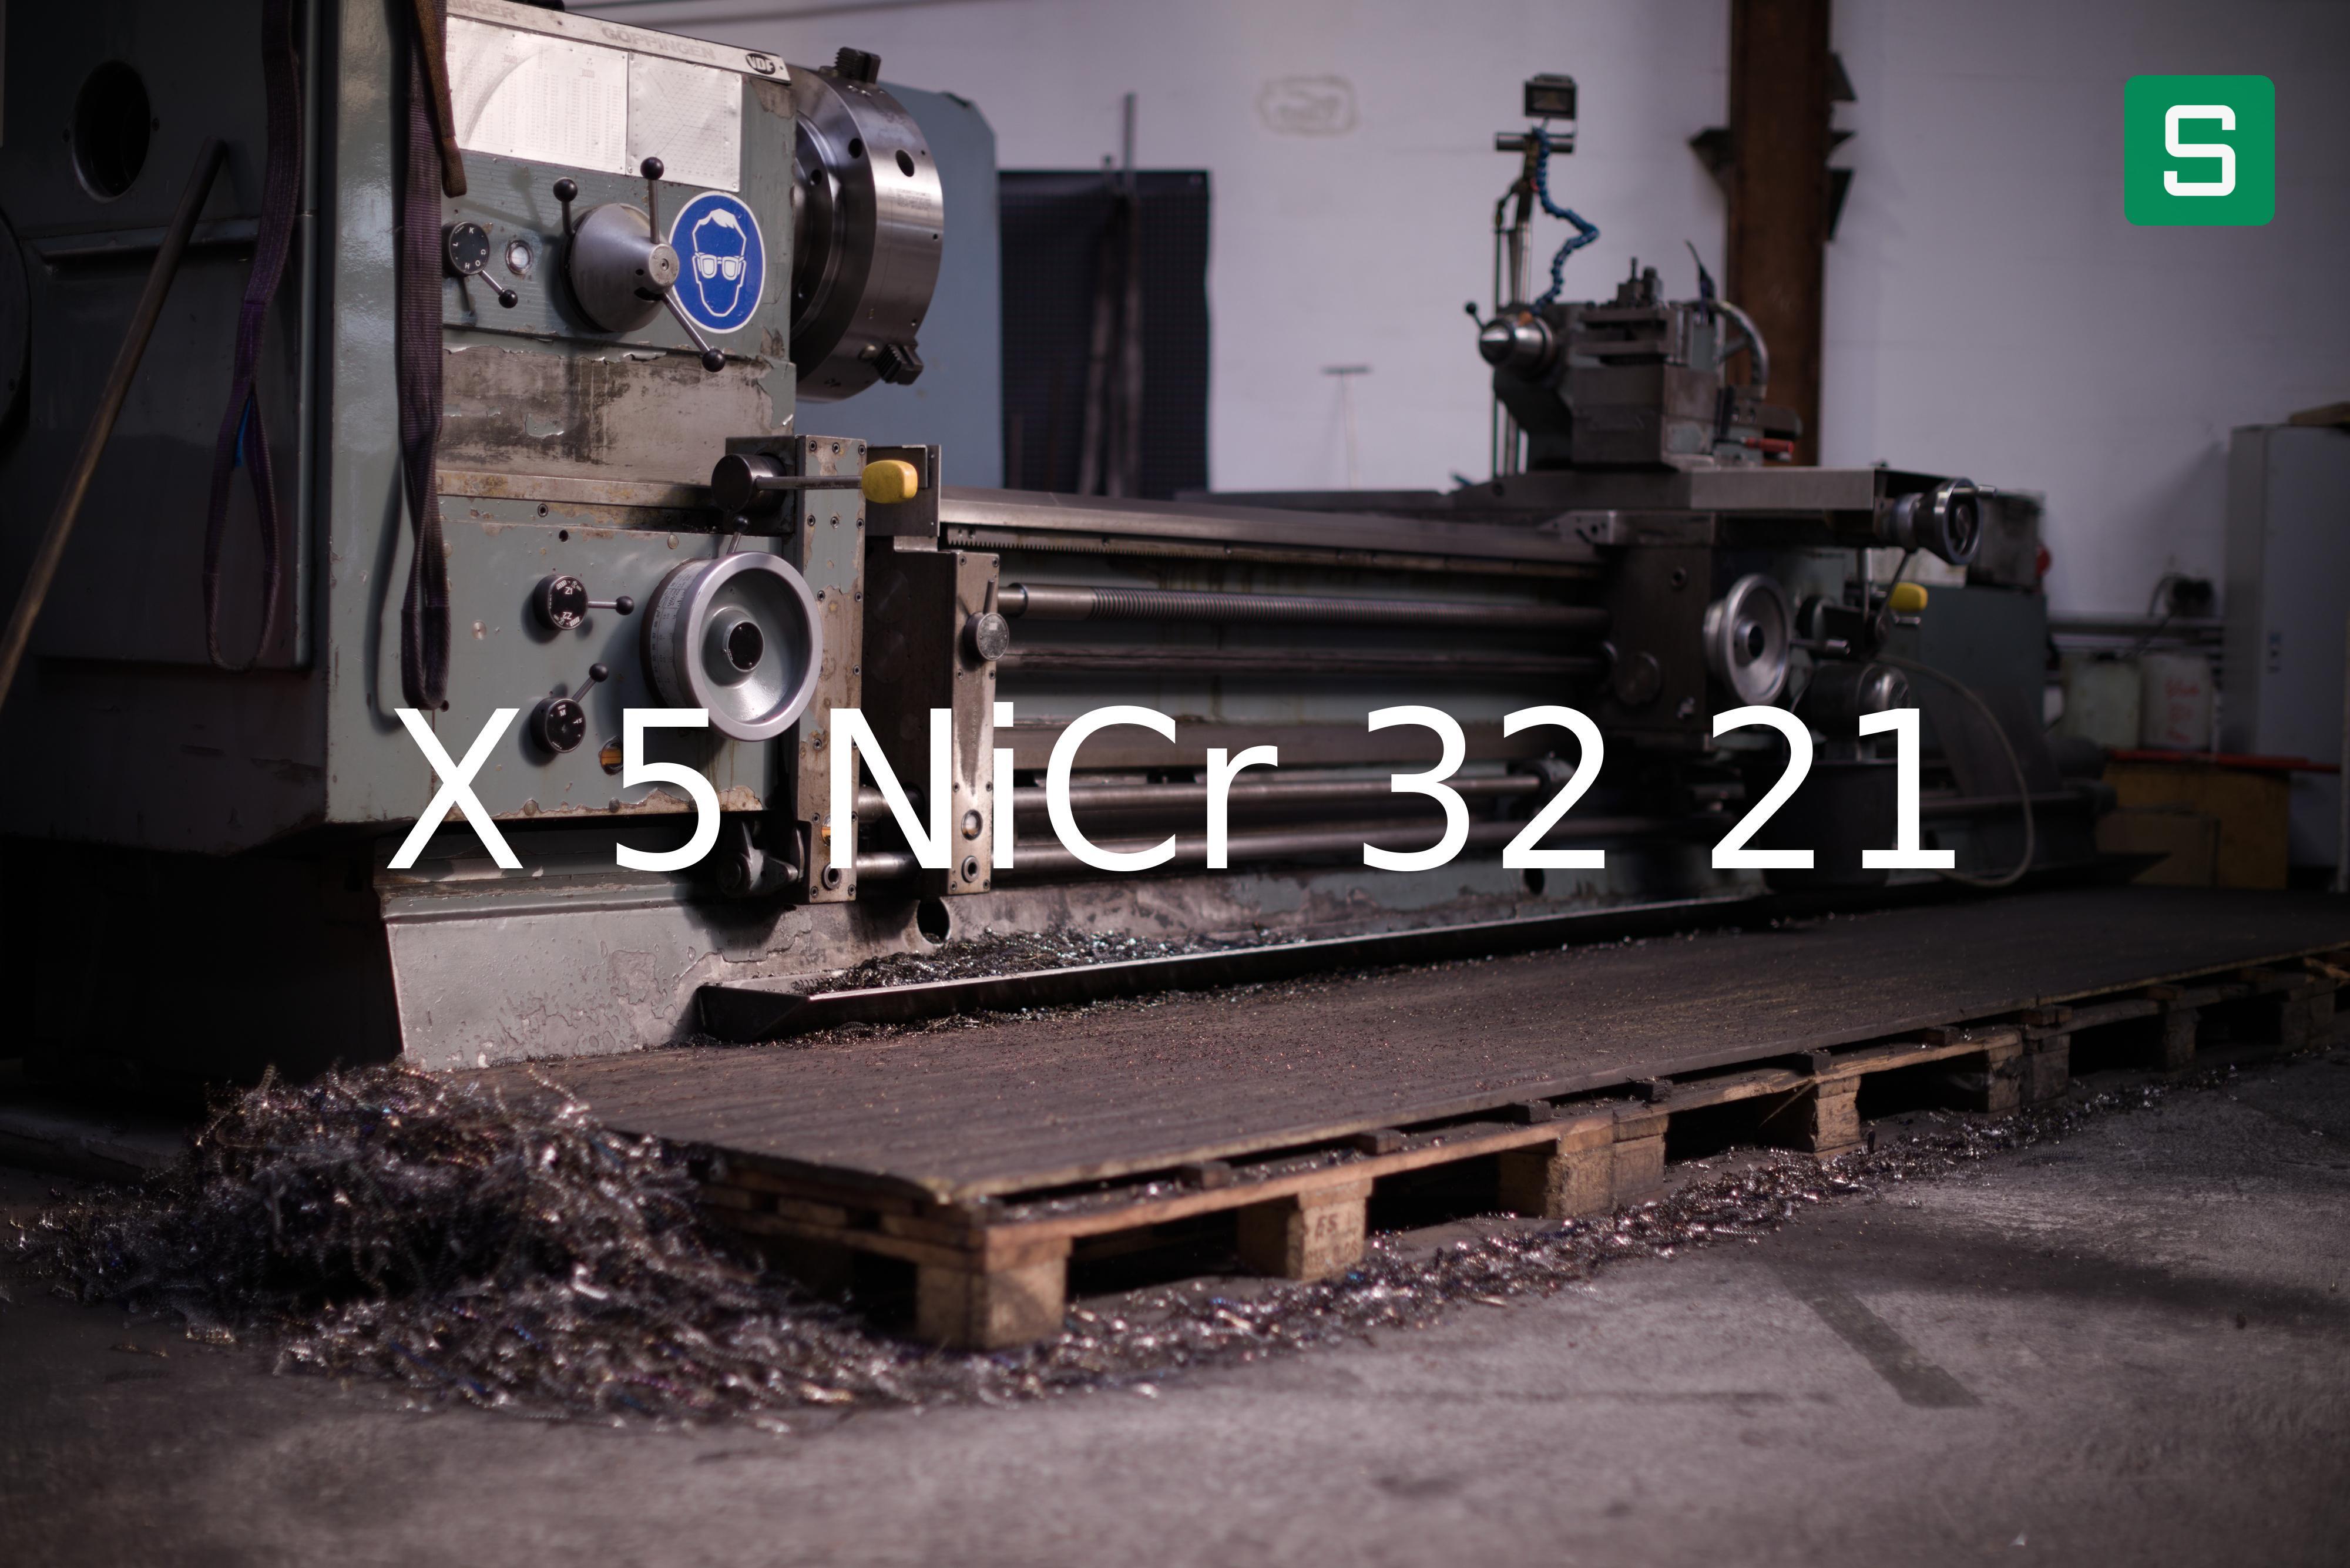 Stahlwerkstoff: X 5 NiCr 32 21